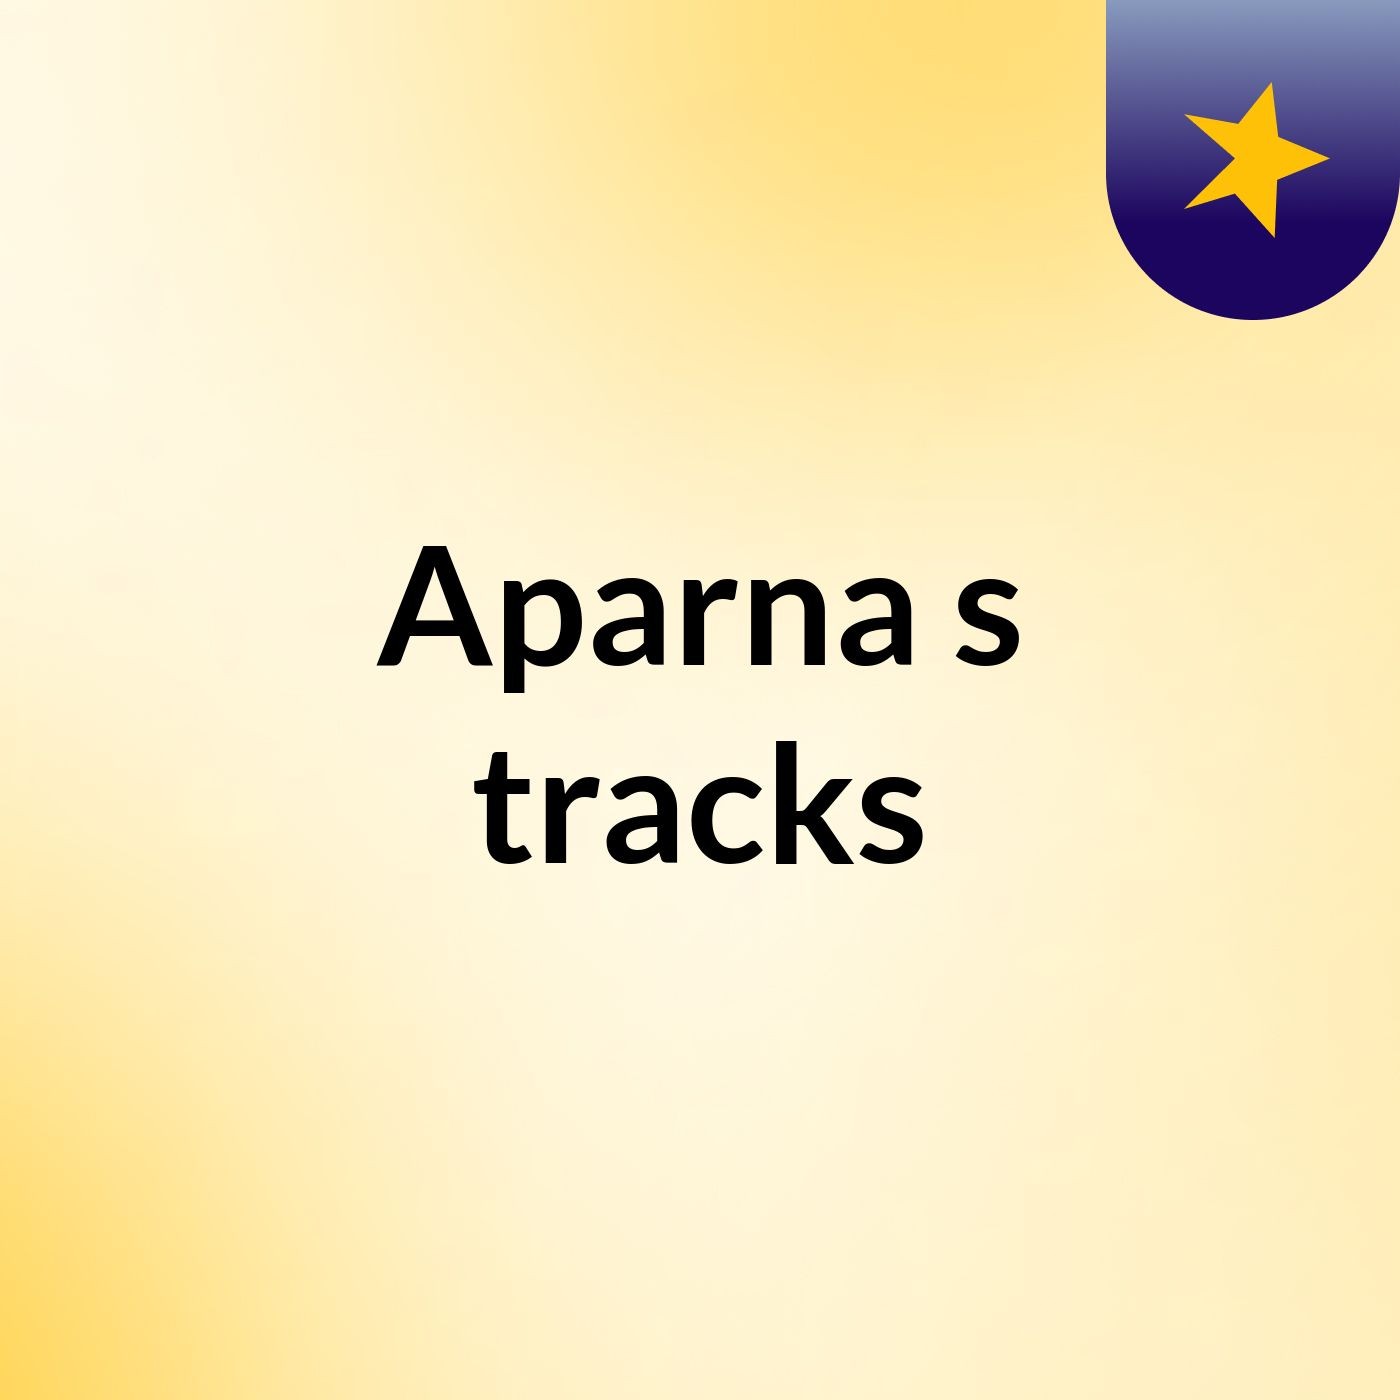 Aparna's tracks